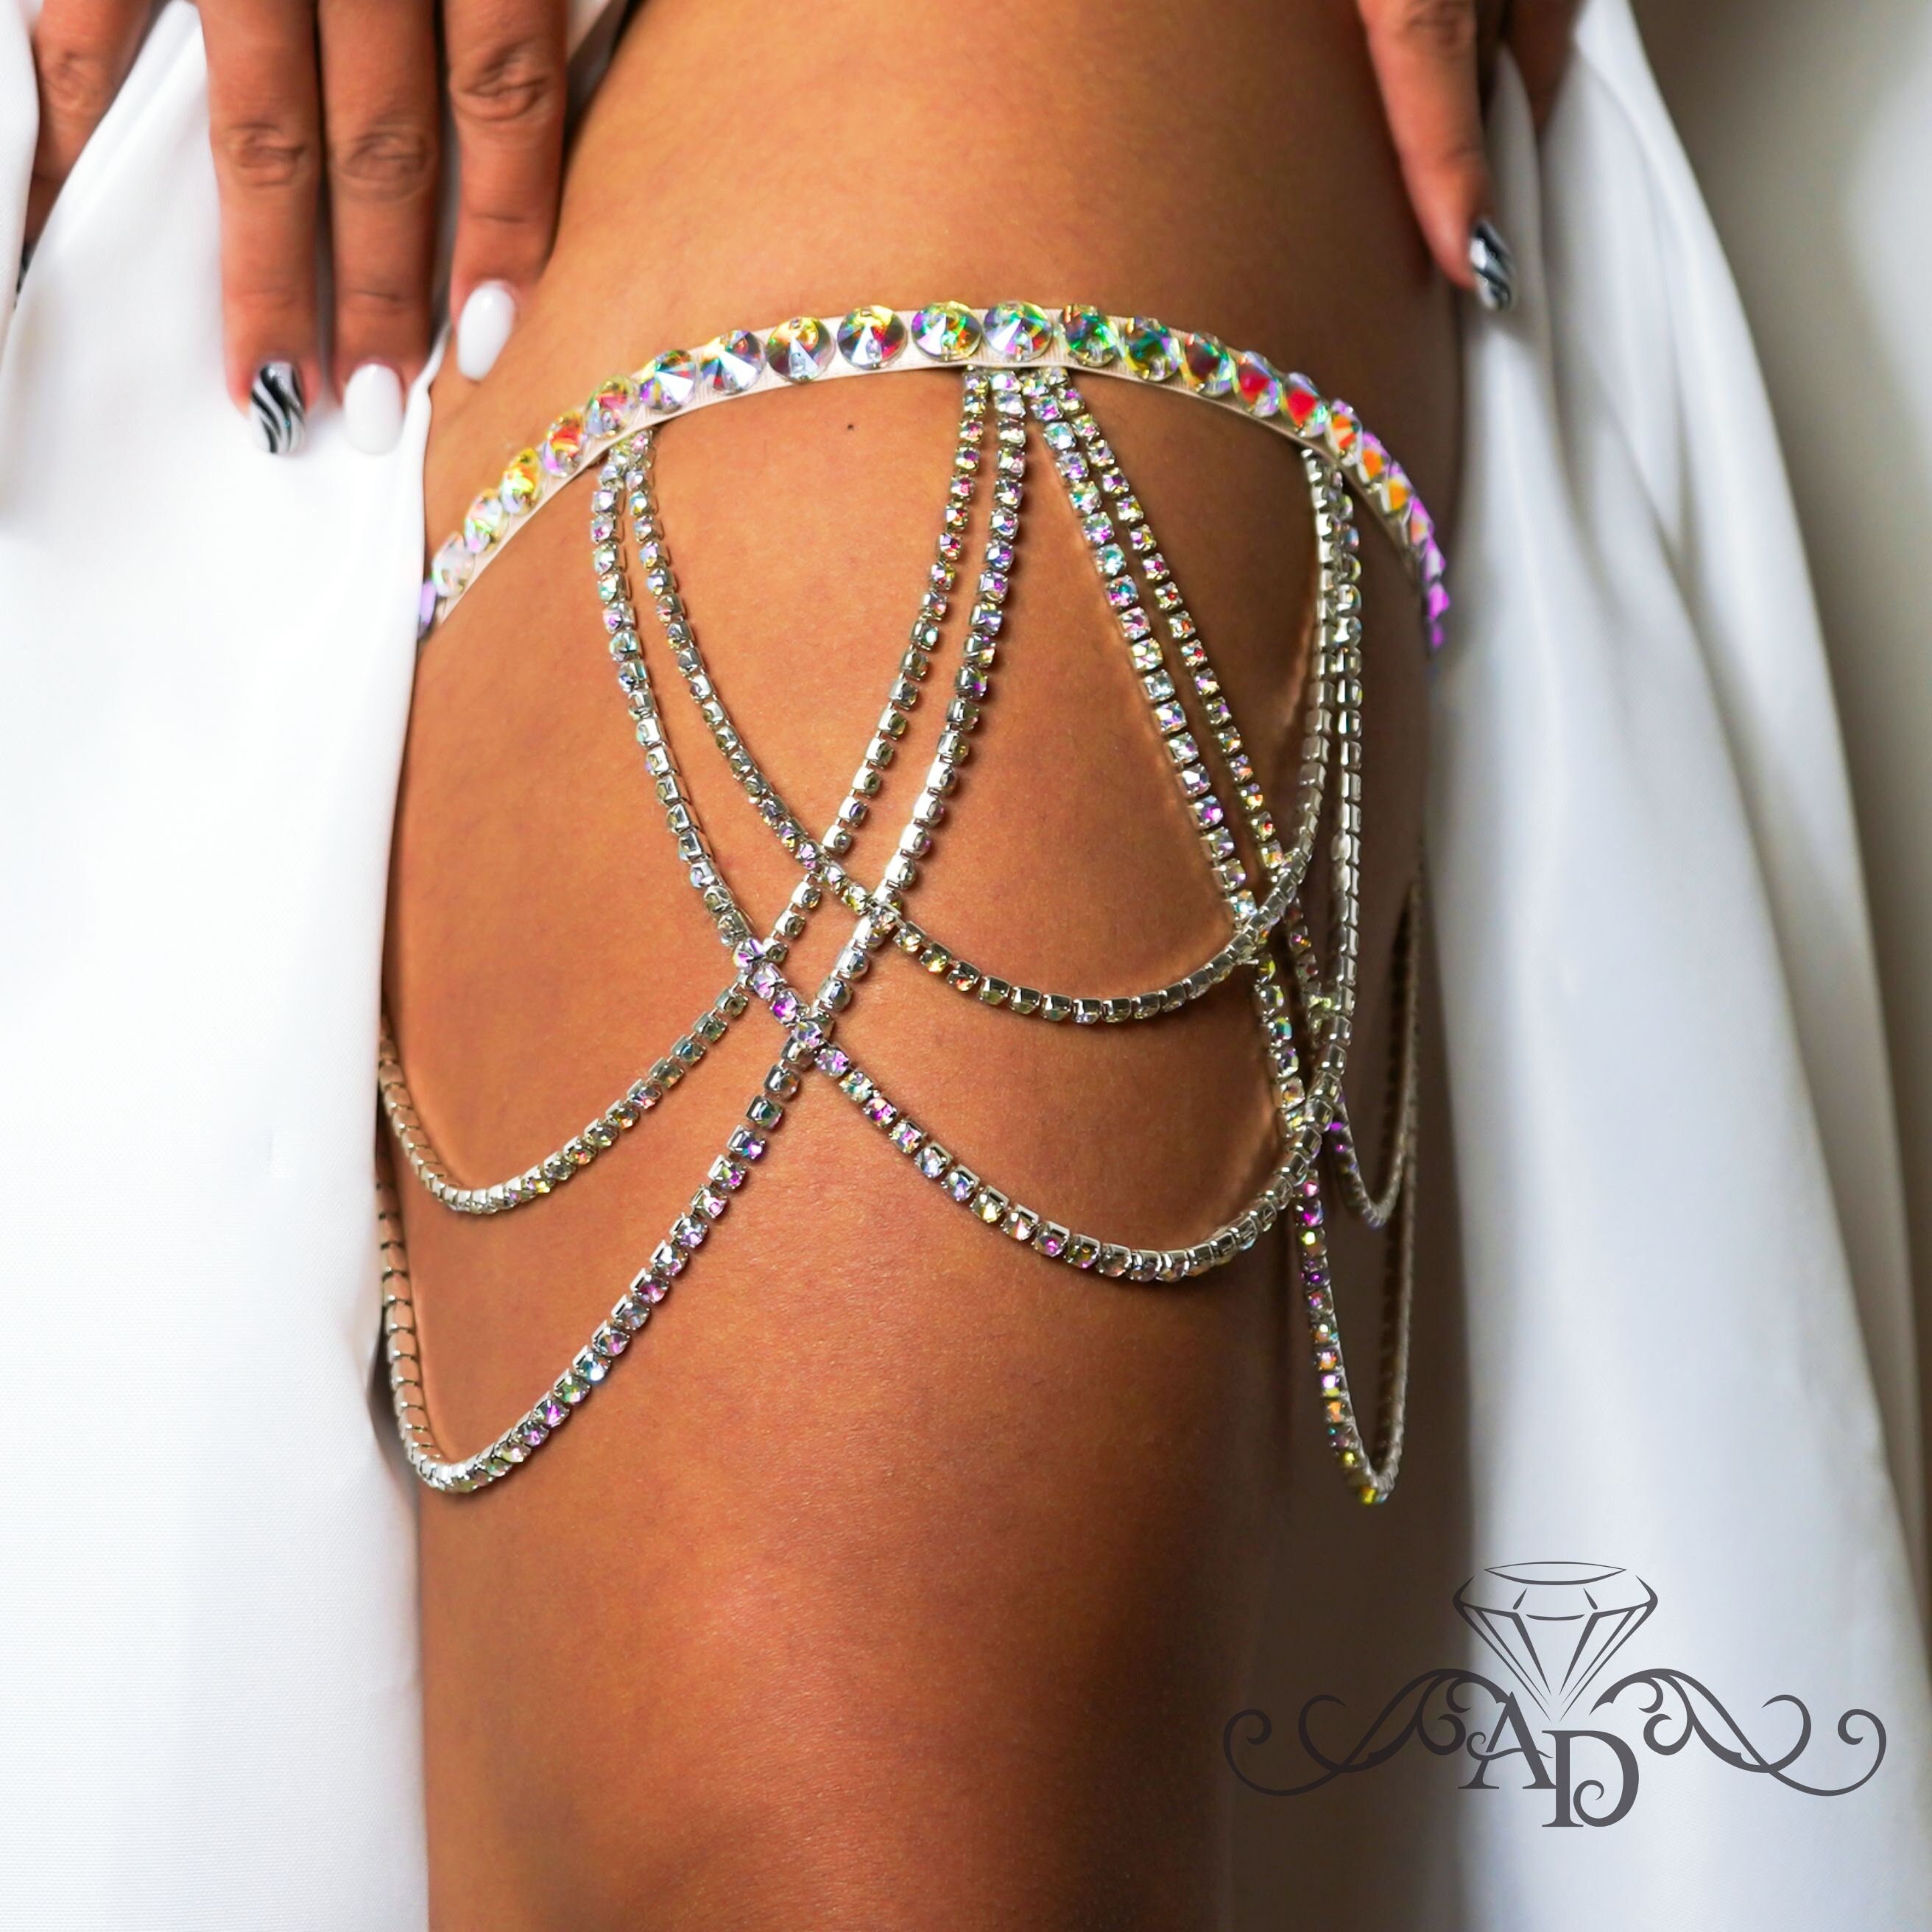 Thigh High Crystal Jewelry Body Jewelry Leg Bracelet | Etsy | Body jewelry,  High jewelry, Crystal jewelry